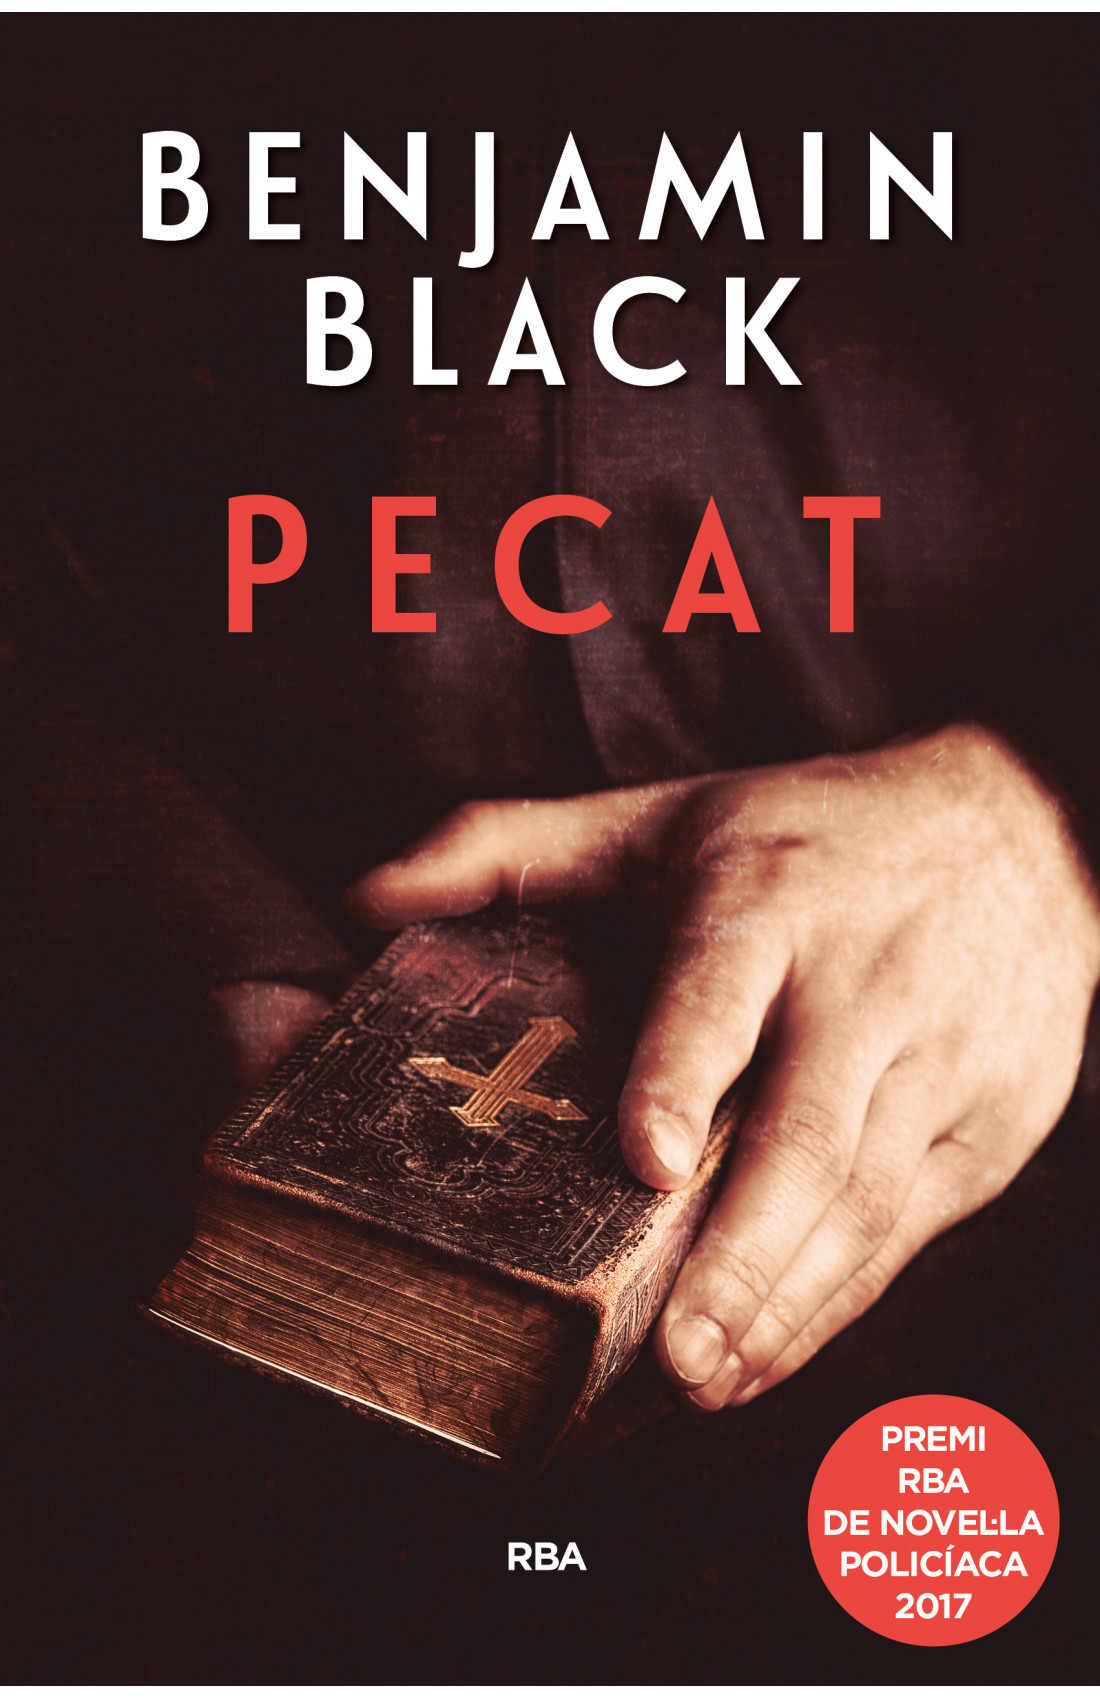 Benjamin Black: Pecat (català language, 2018, RBA)